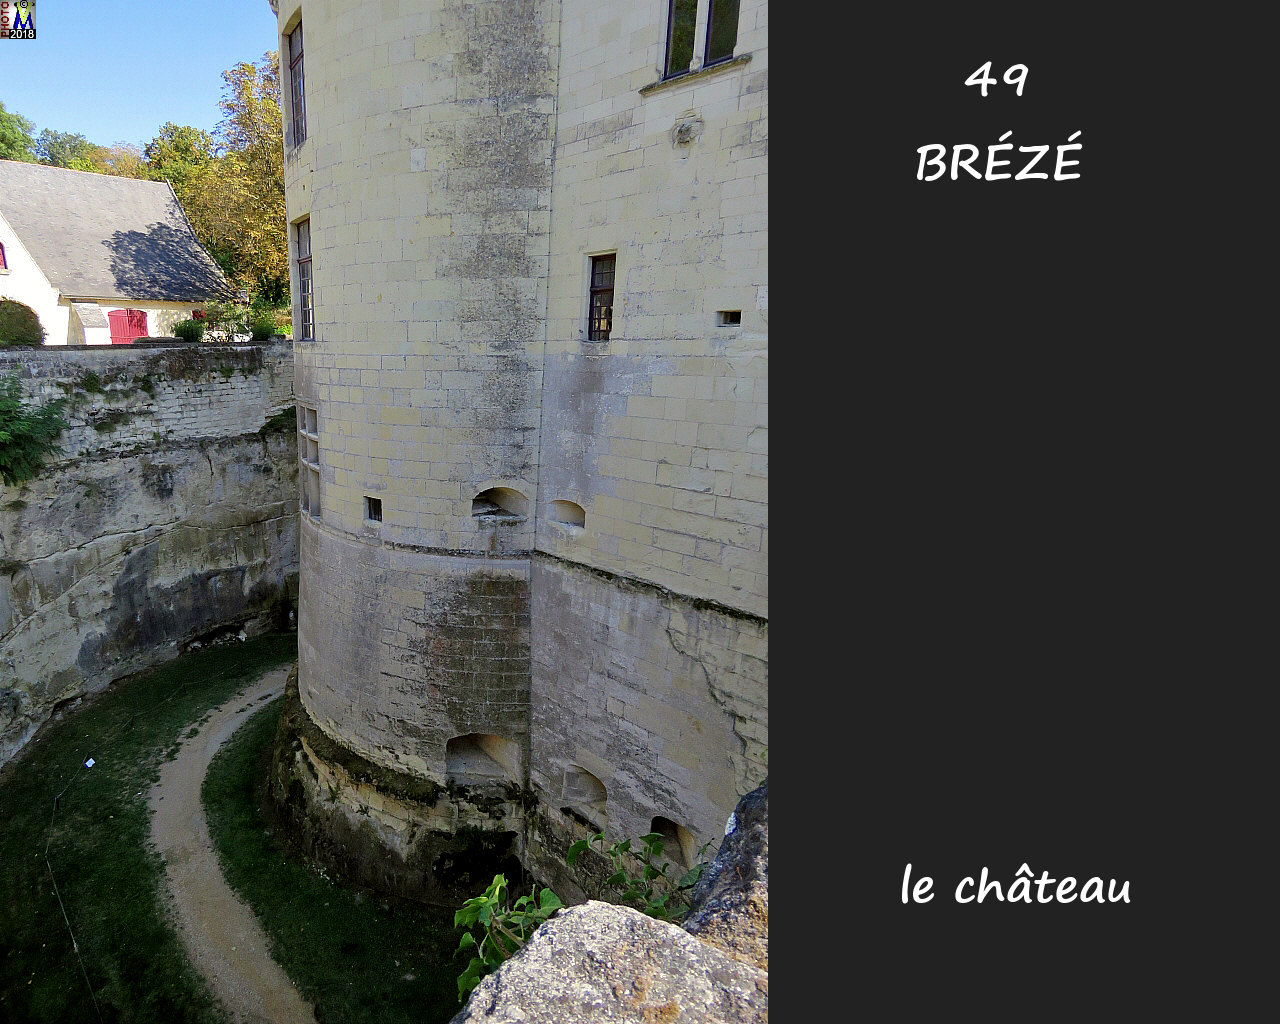 49BREZE_chateau_1200.jpg